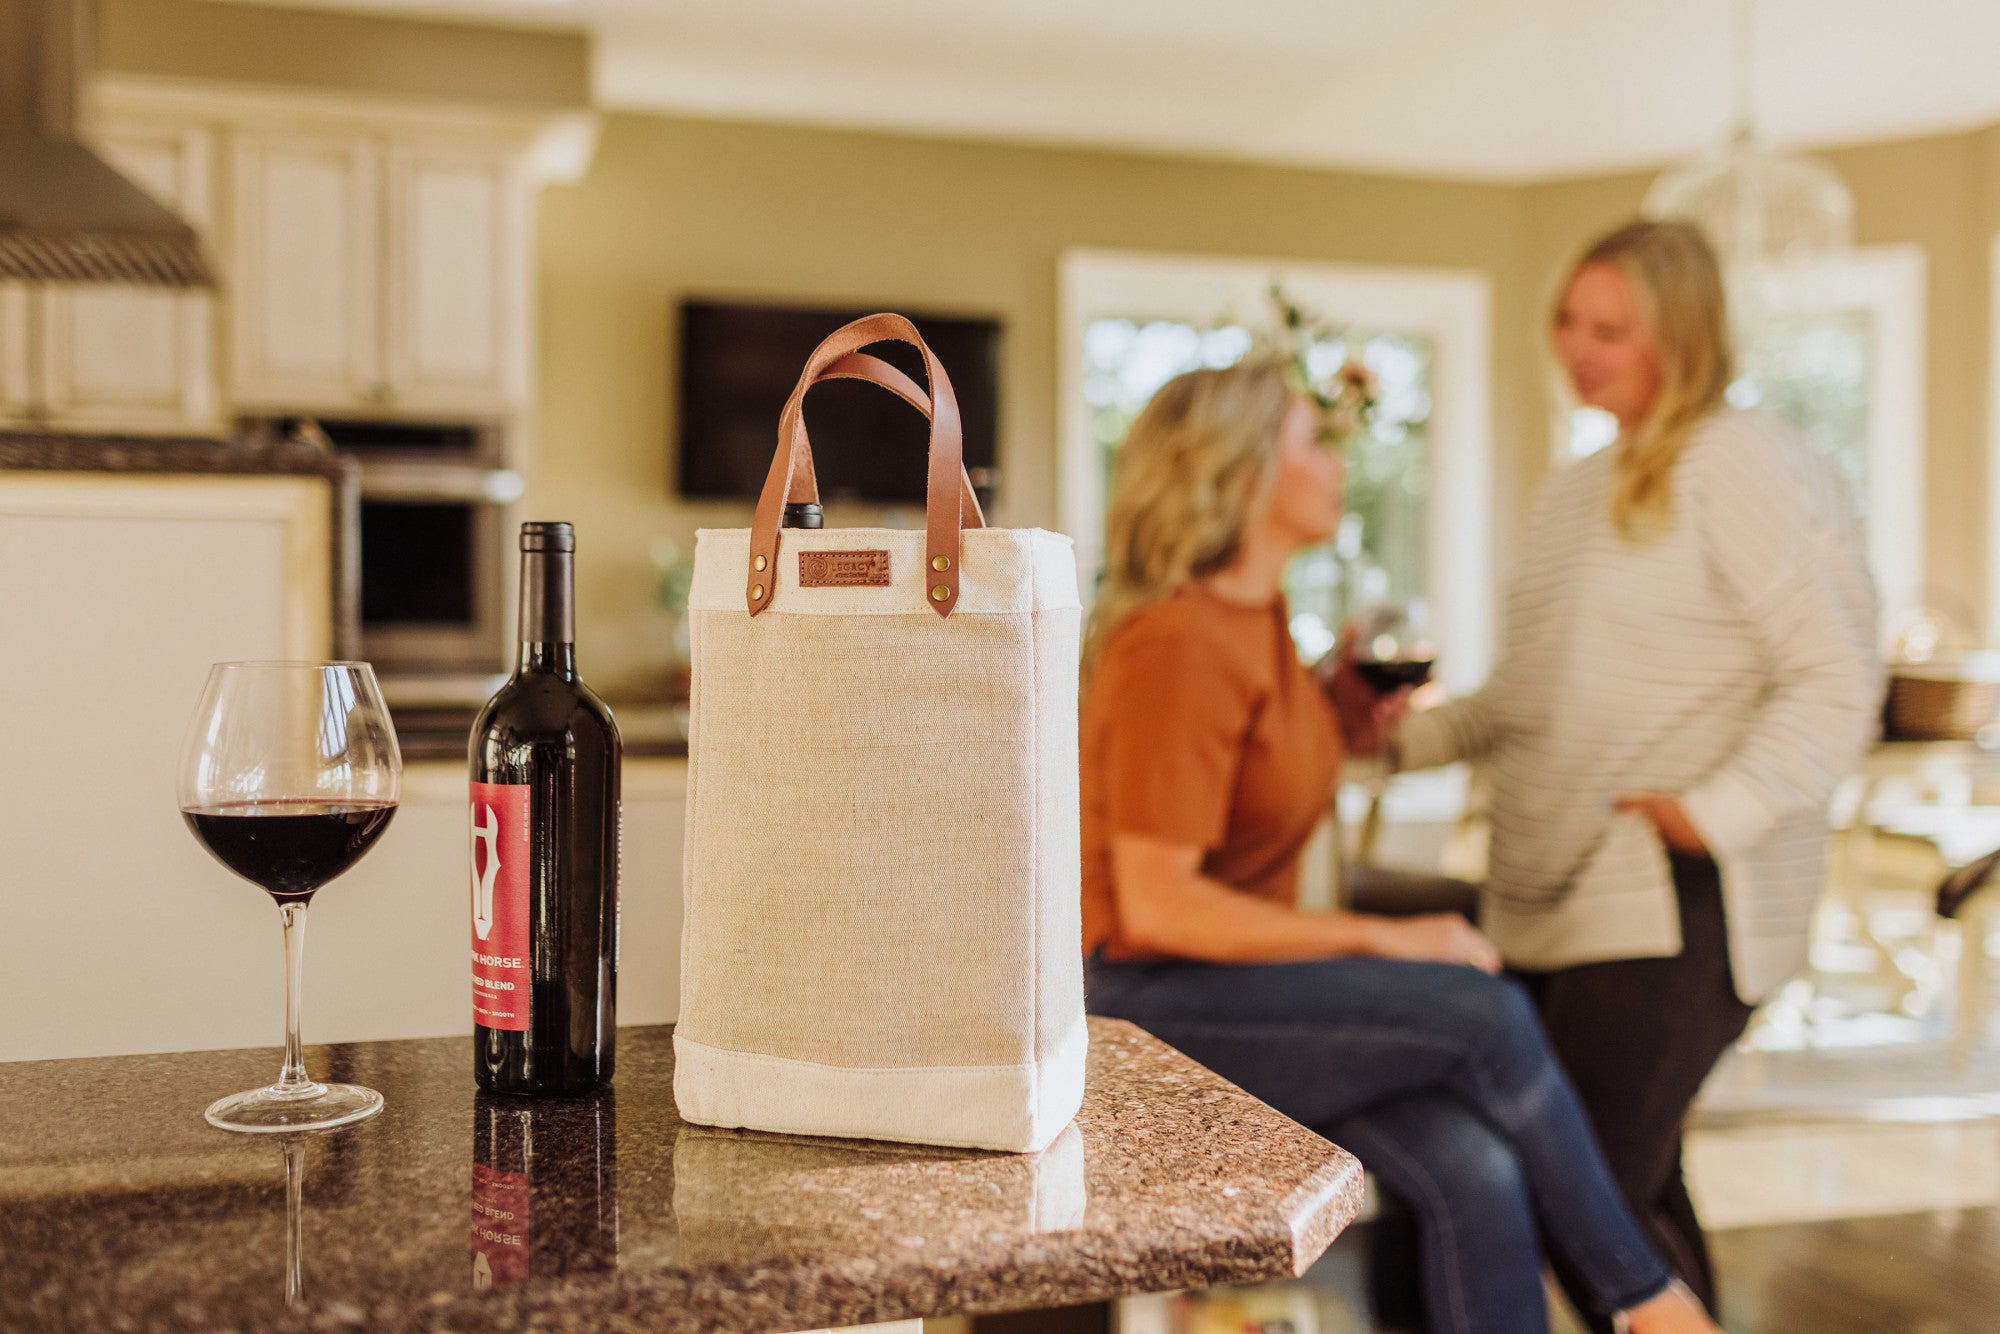 Tampa Bay Lightning - Pinot Jute 2 Bottle Insulated Wine Bag